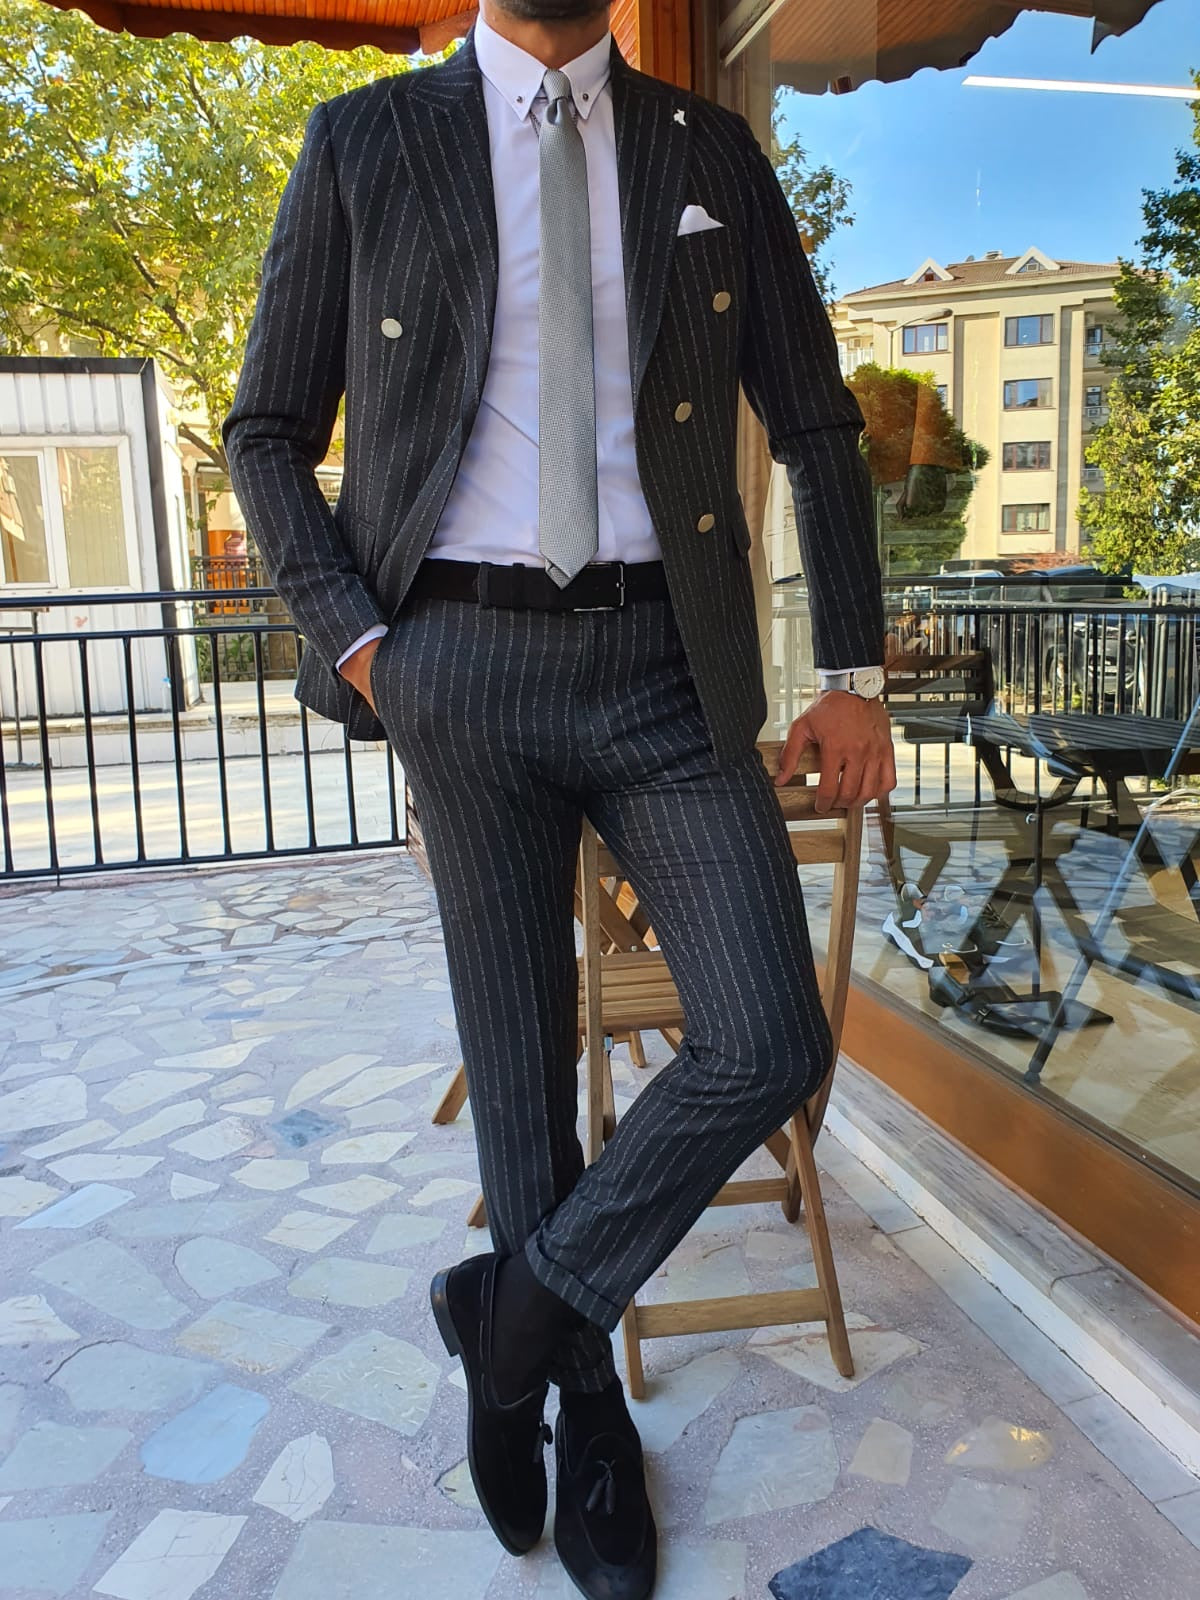 Edmond Black Slim Fit Pinstripe Double Breasted Suit